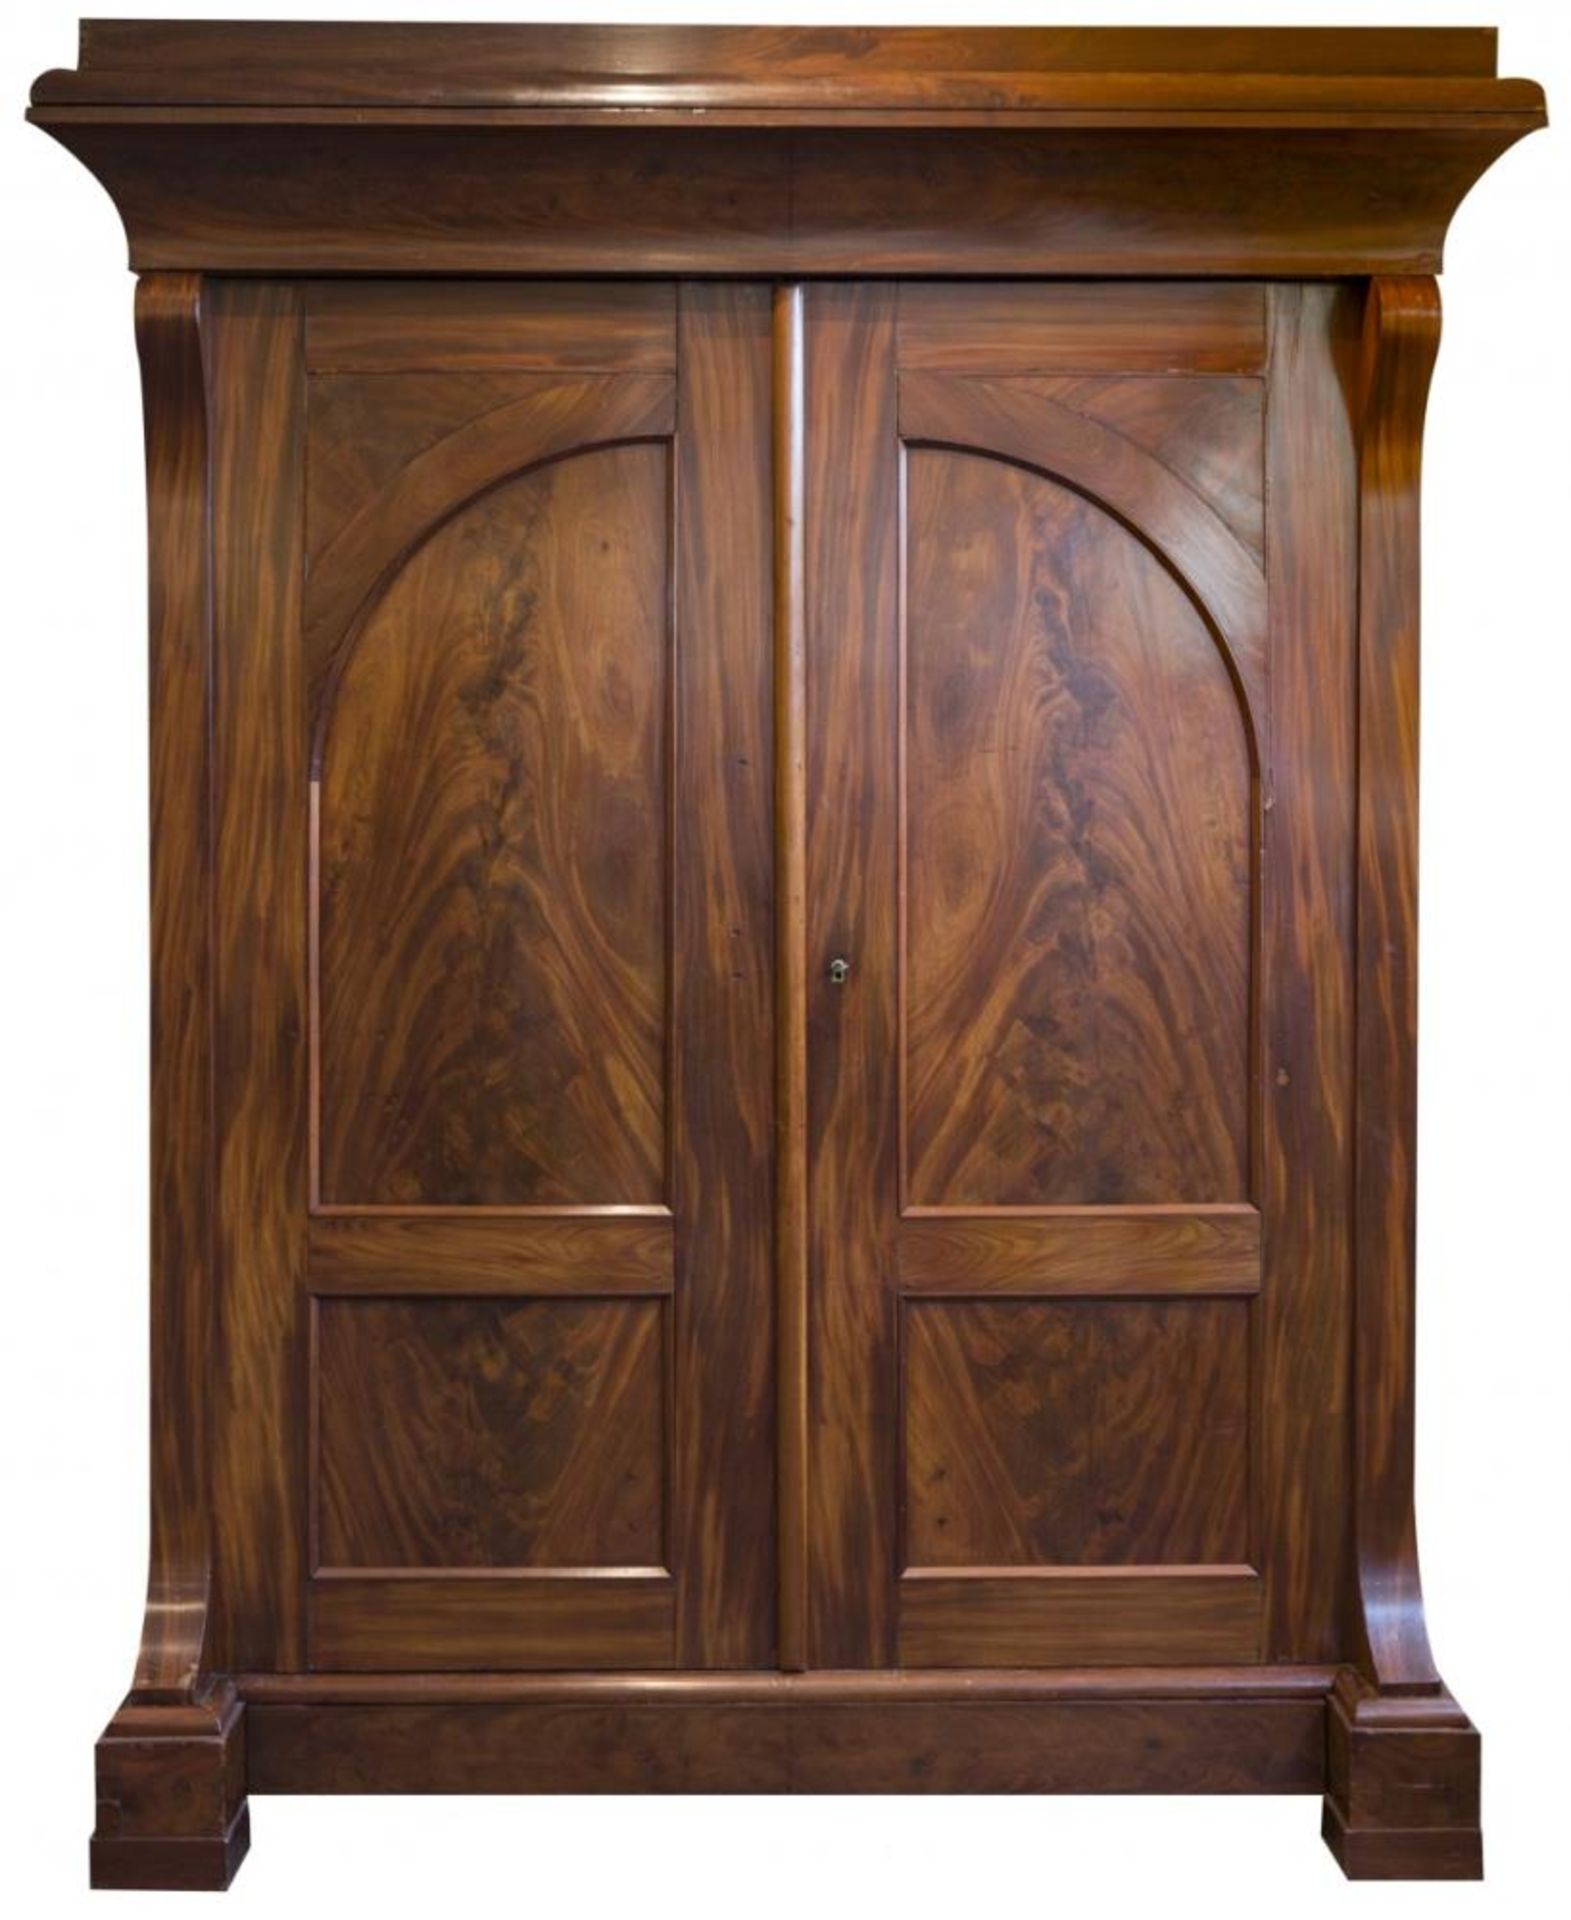 A mahogany veneered Biedermeier cabinet, Dutch, 2nd quarter 19th century.